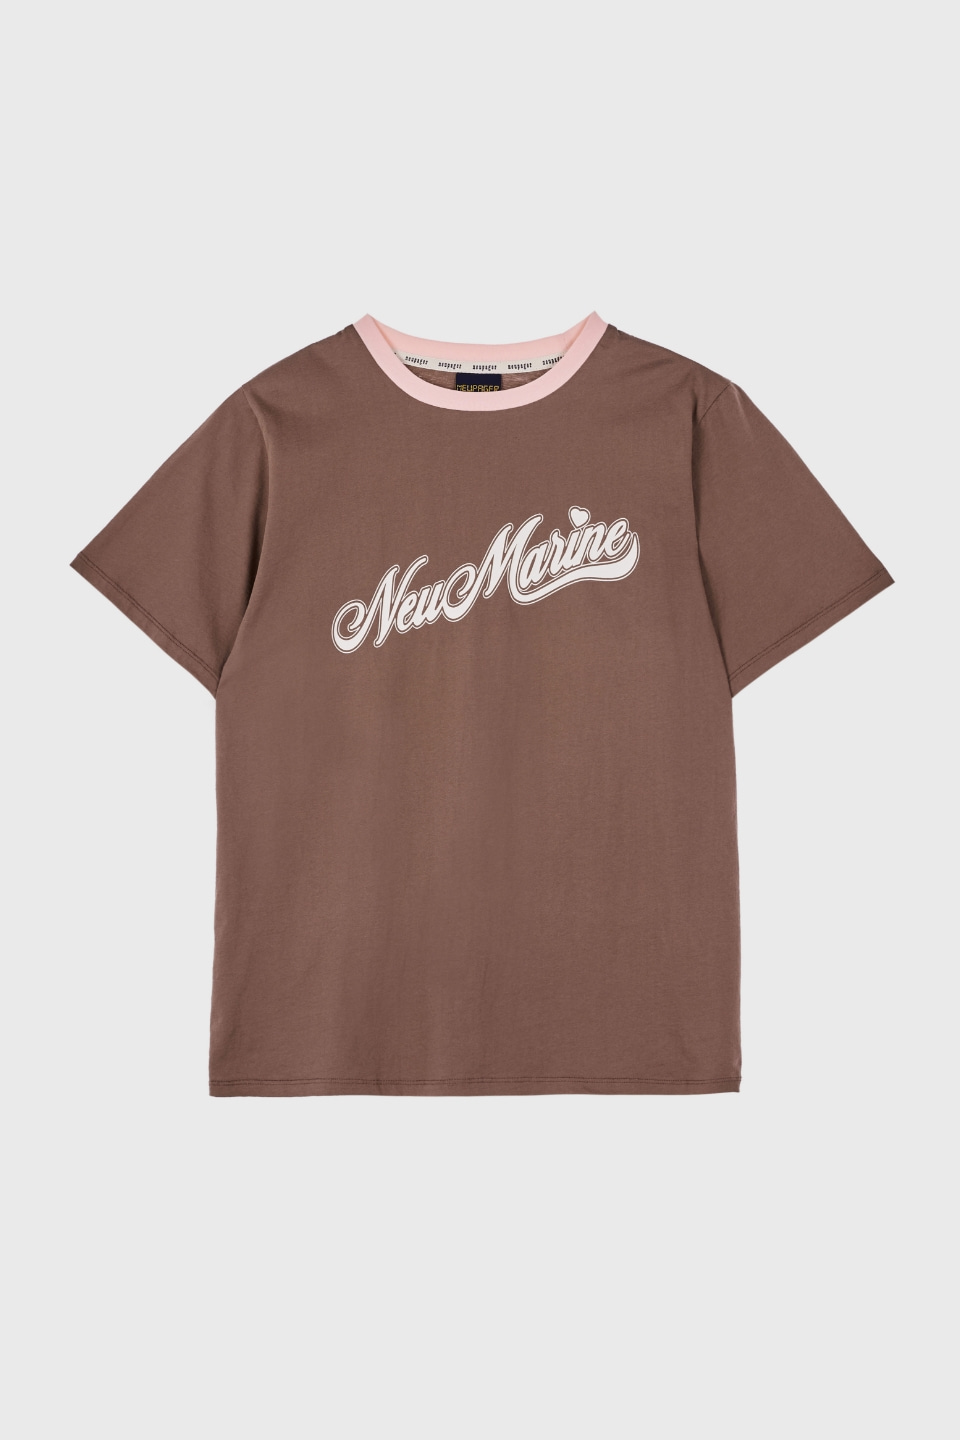 color marine t-shirt - brown